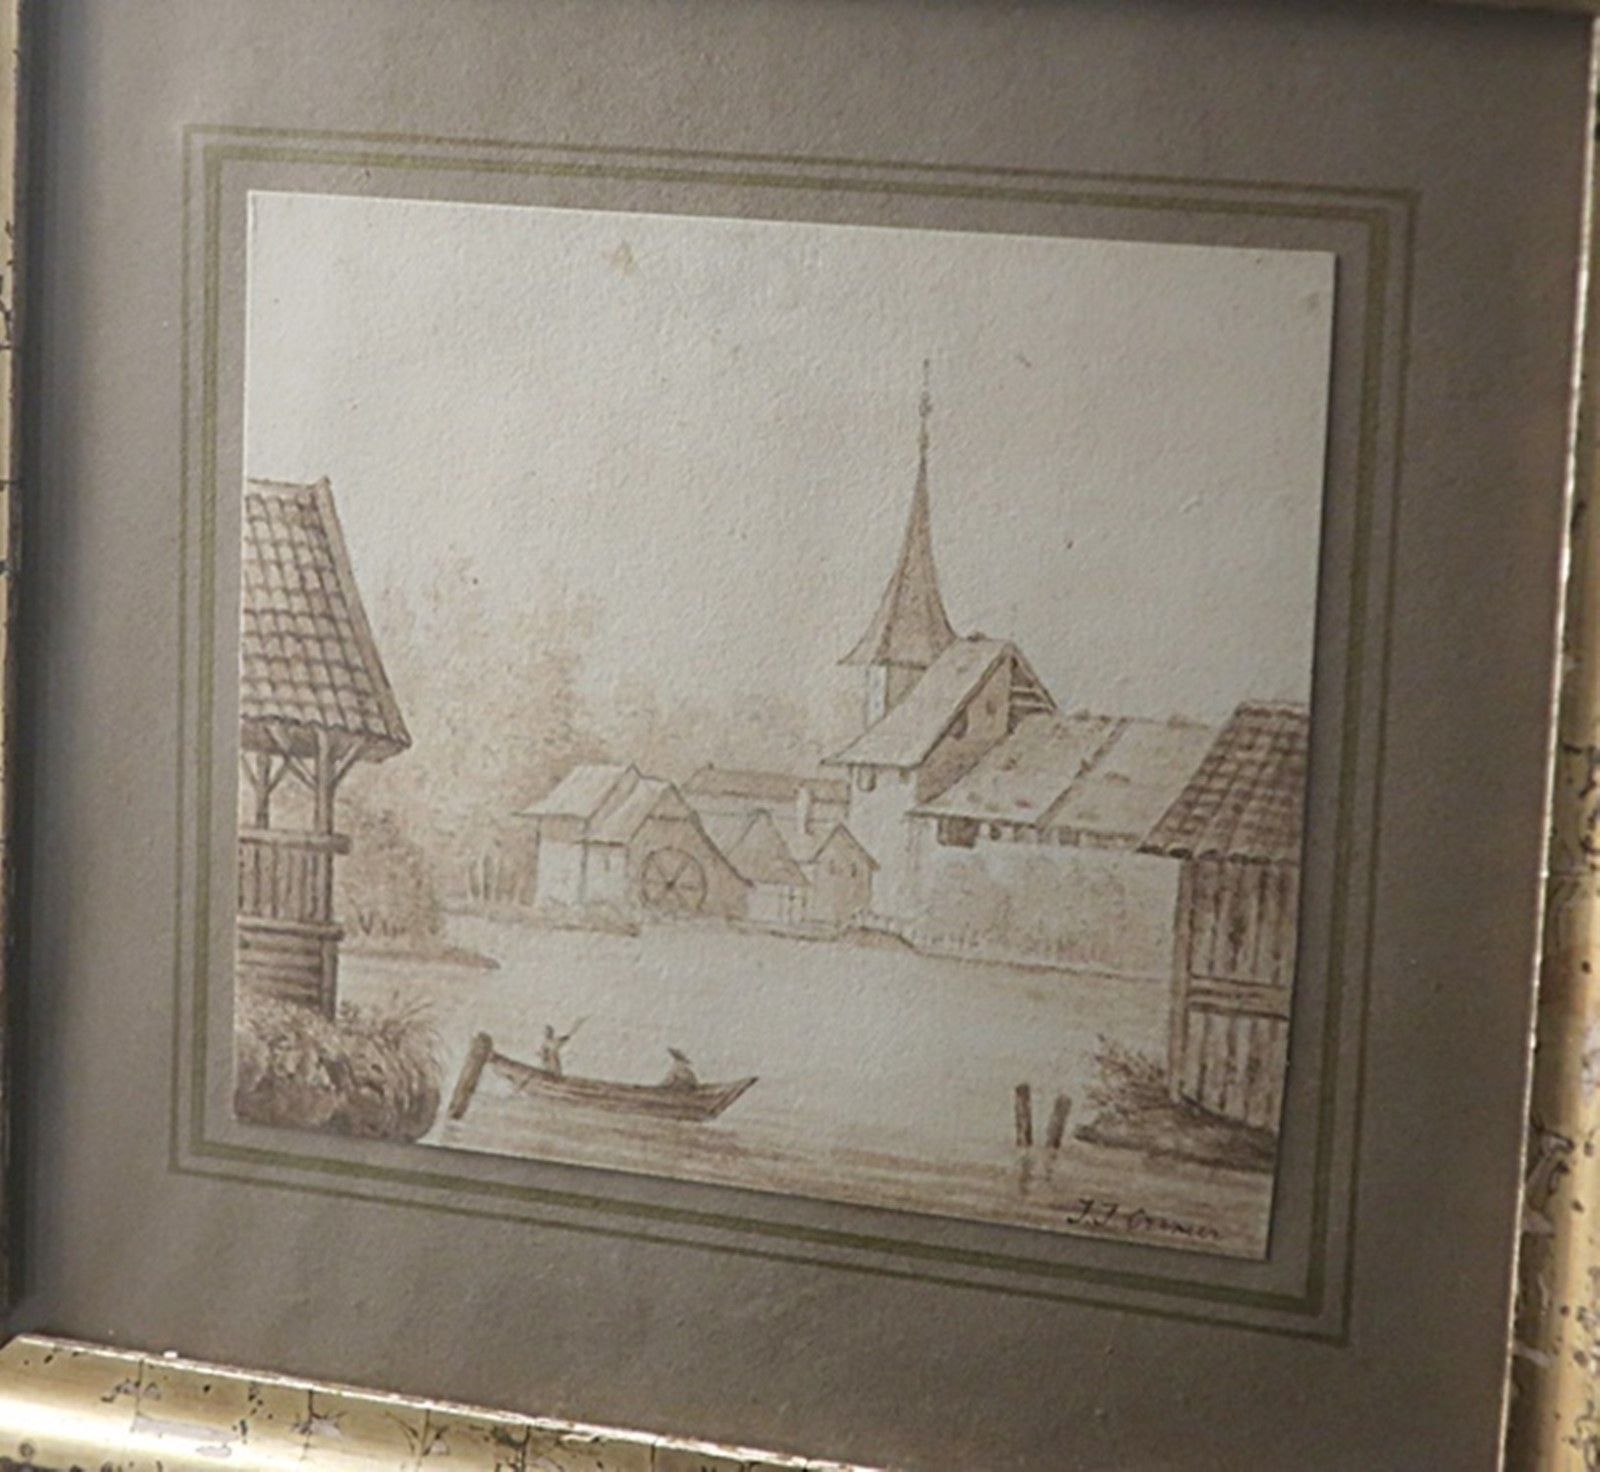 Null "浪漫的河流风景"，深褐色水墨画原稿，右下方签名 J.J.Cremer（1827-1880 年），BA 约 10.3x12.1cm，约 1800 年，&hellip;